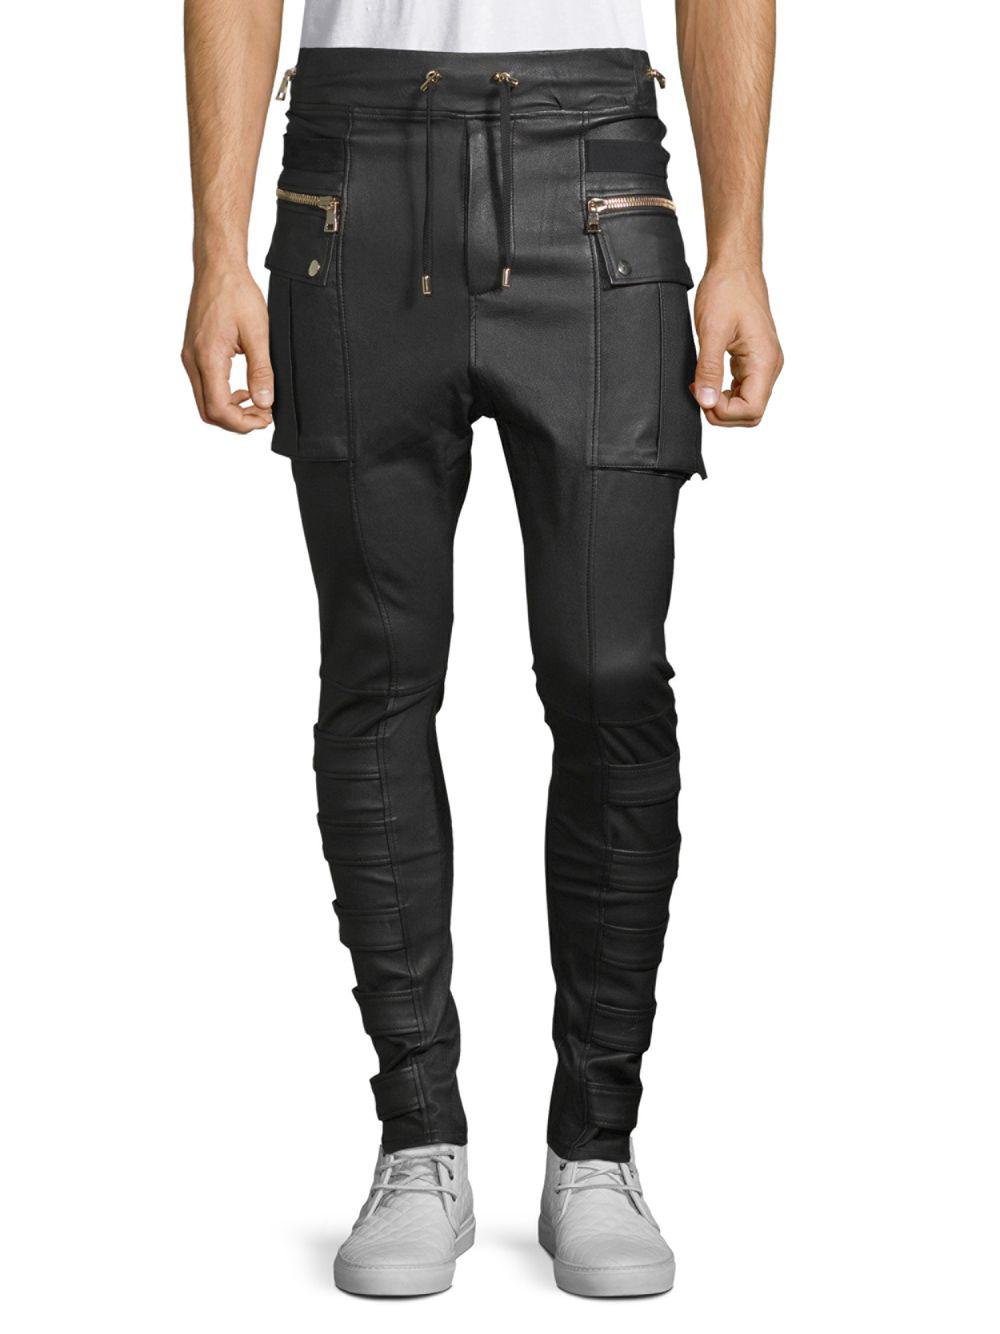 Balmain Calecon Moto Leather Pants in Black for Men - Lyst